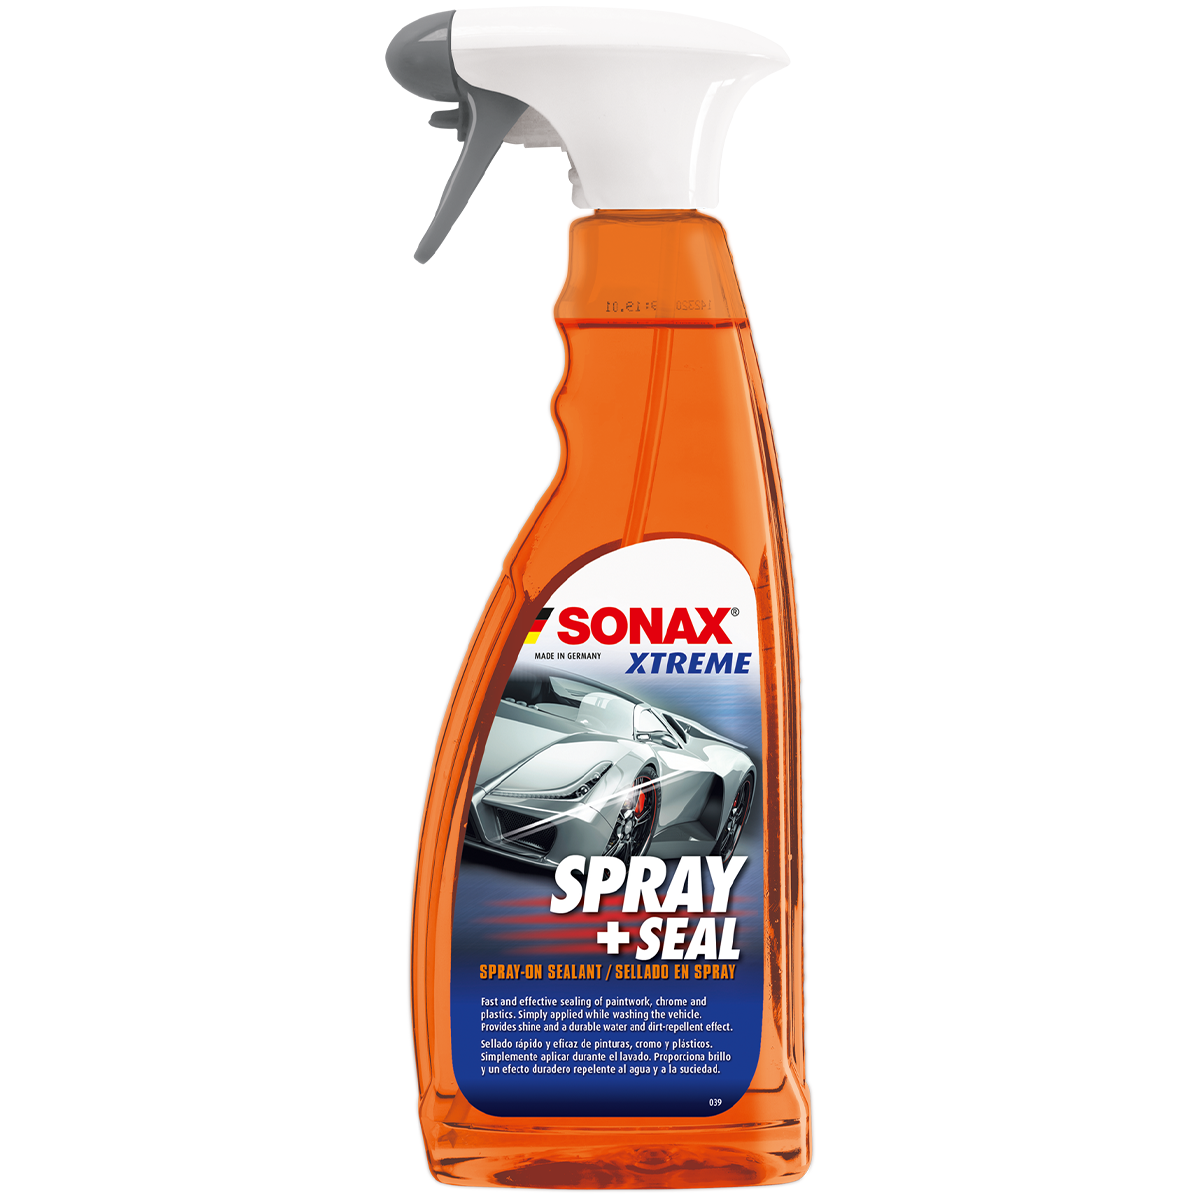 SONAX XTREME Spray + Seal Touchless Sealant 750ml *SALE*